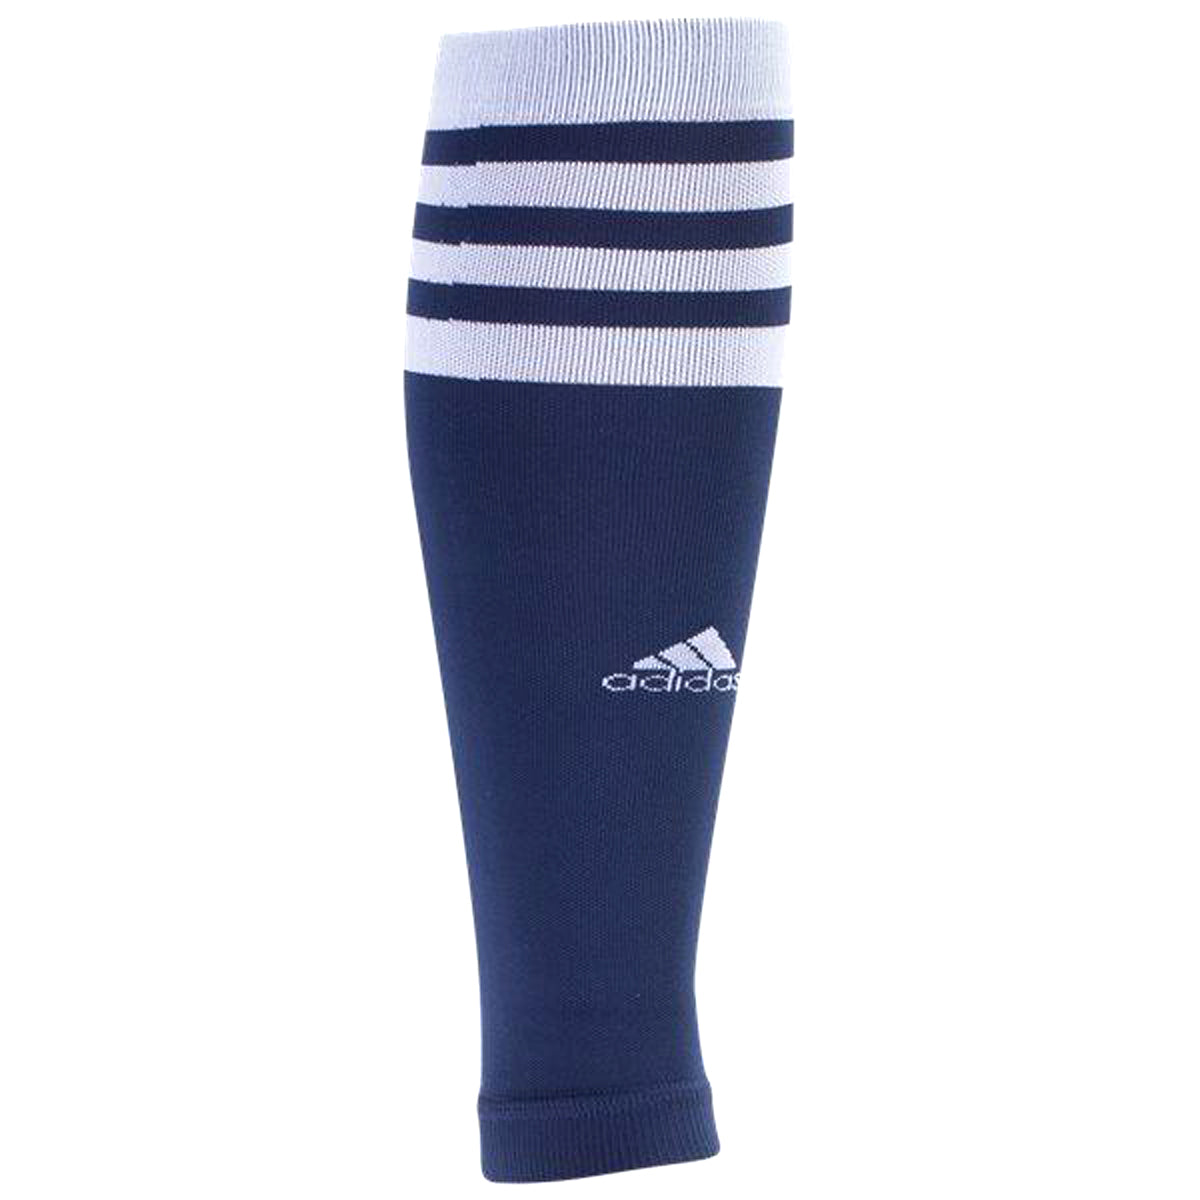 Adidas Team Speed Sock System Calf Sleeve (1 pair) Navy